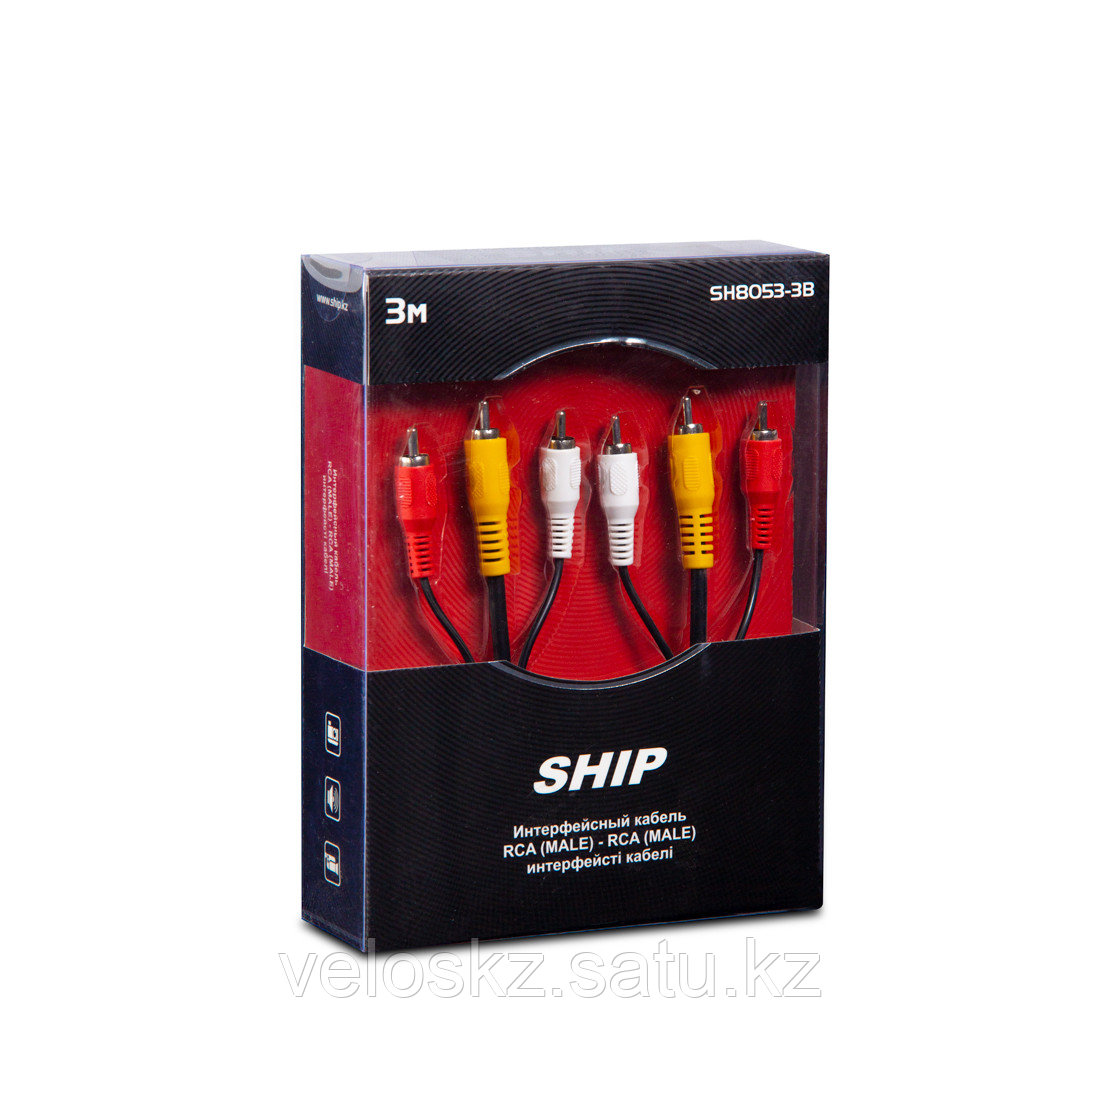 SHIP Кабель интерфейсный SHIP, SH8053-3B, RCA, (тюльпаны, аудио-видео-звук),  3 м, Чёрный